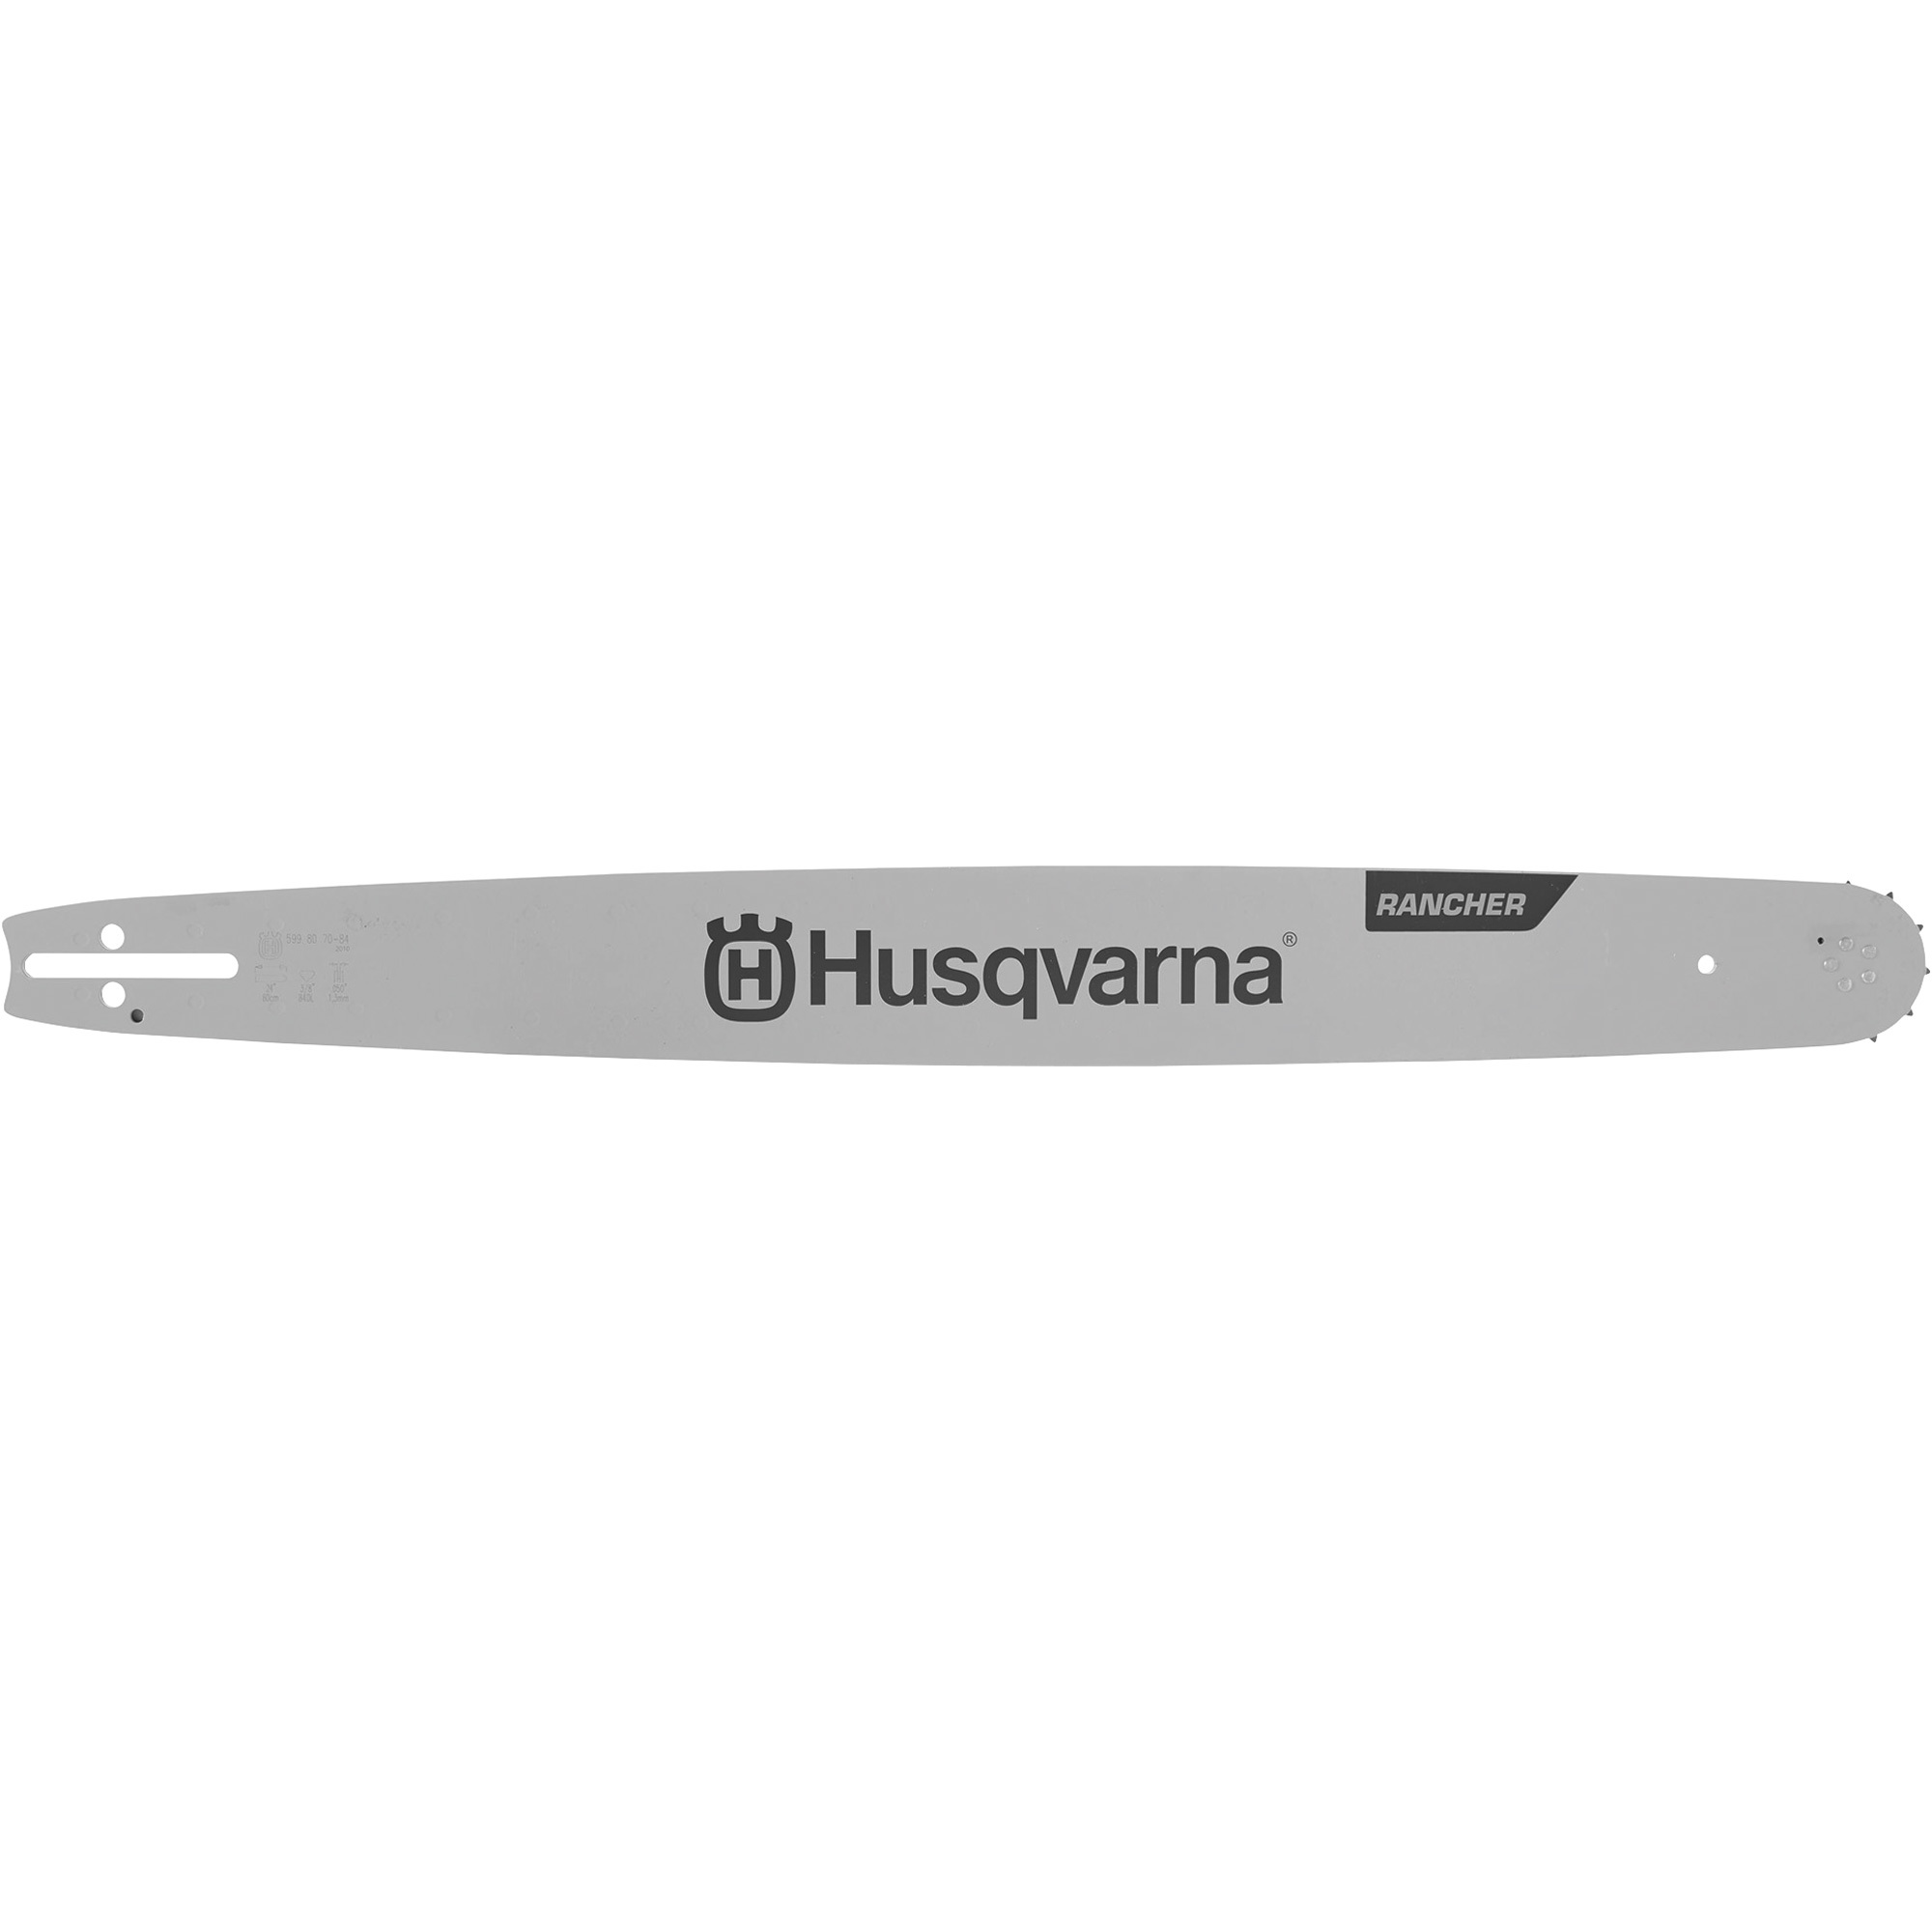 Husqvarna Laminated Chainsaw Guide Bar, 24Inch Bar Length, Model HL-280